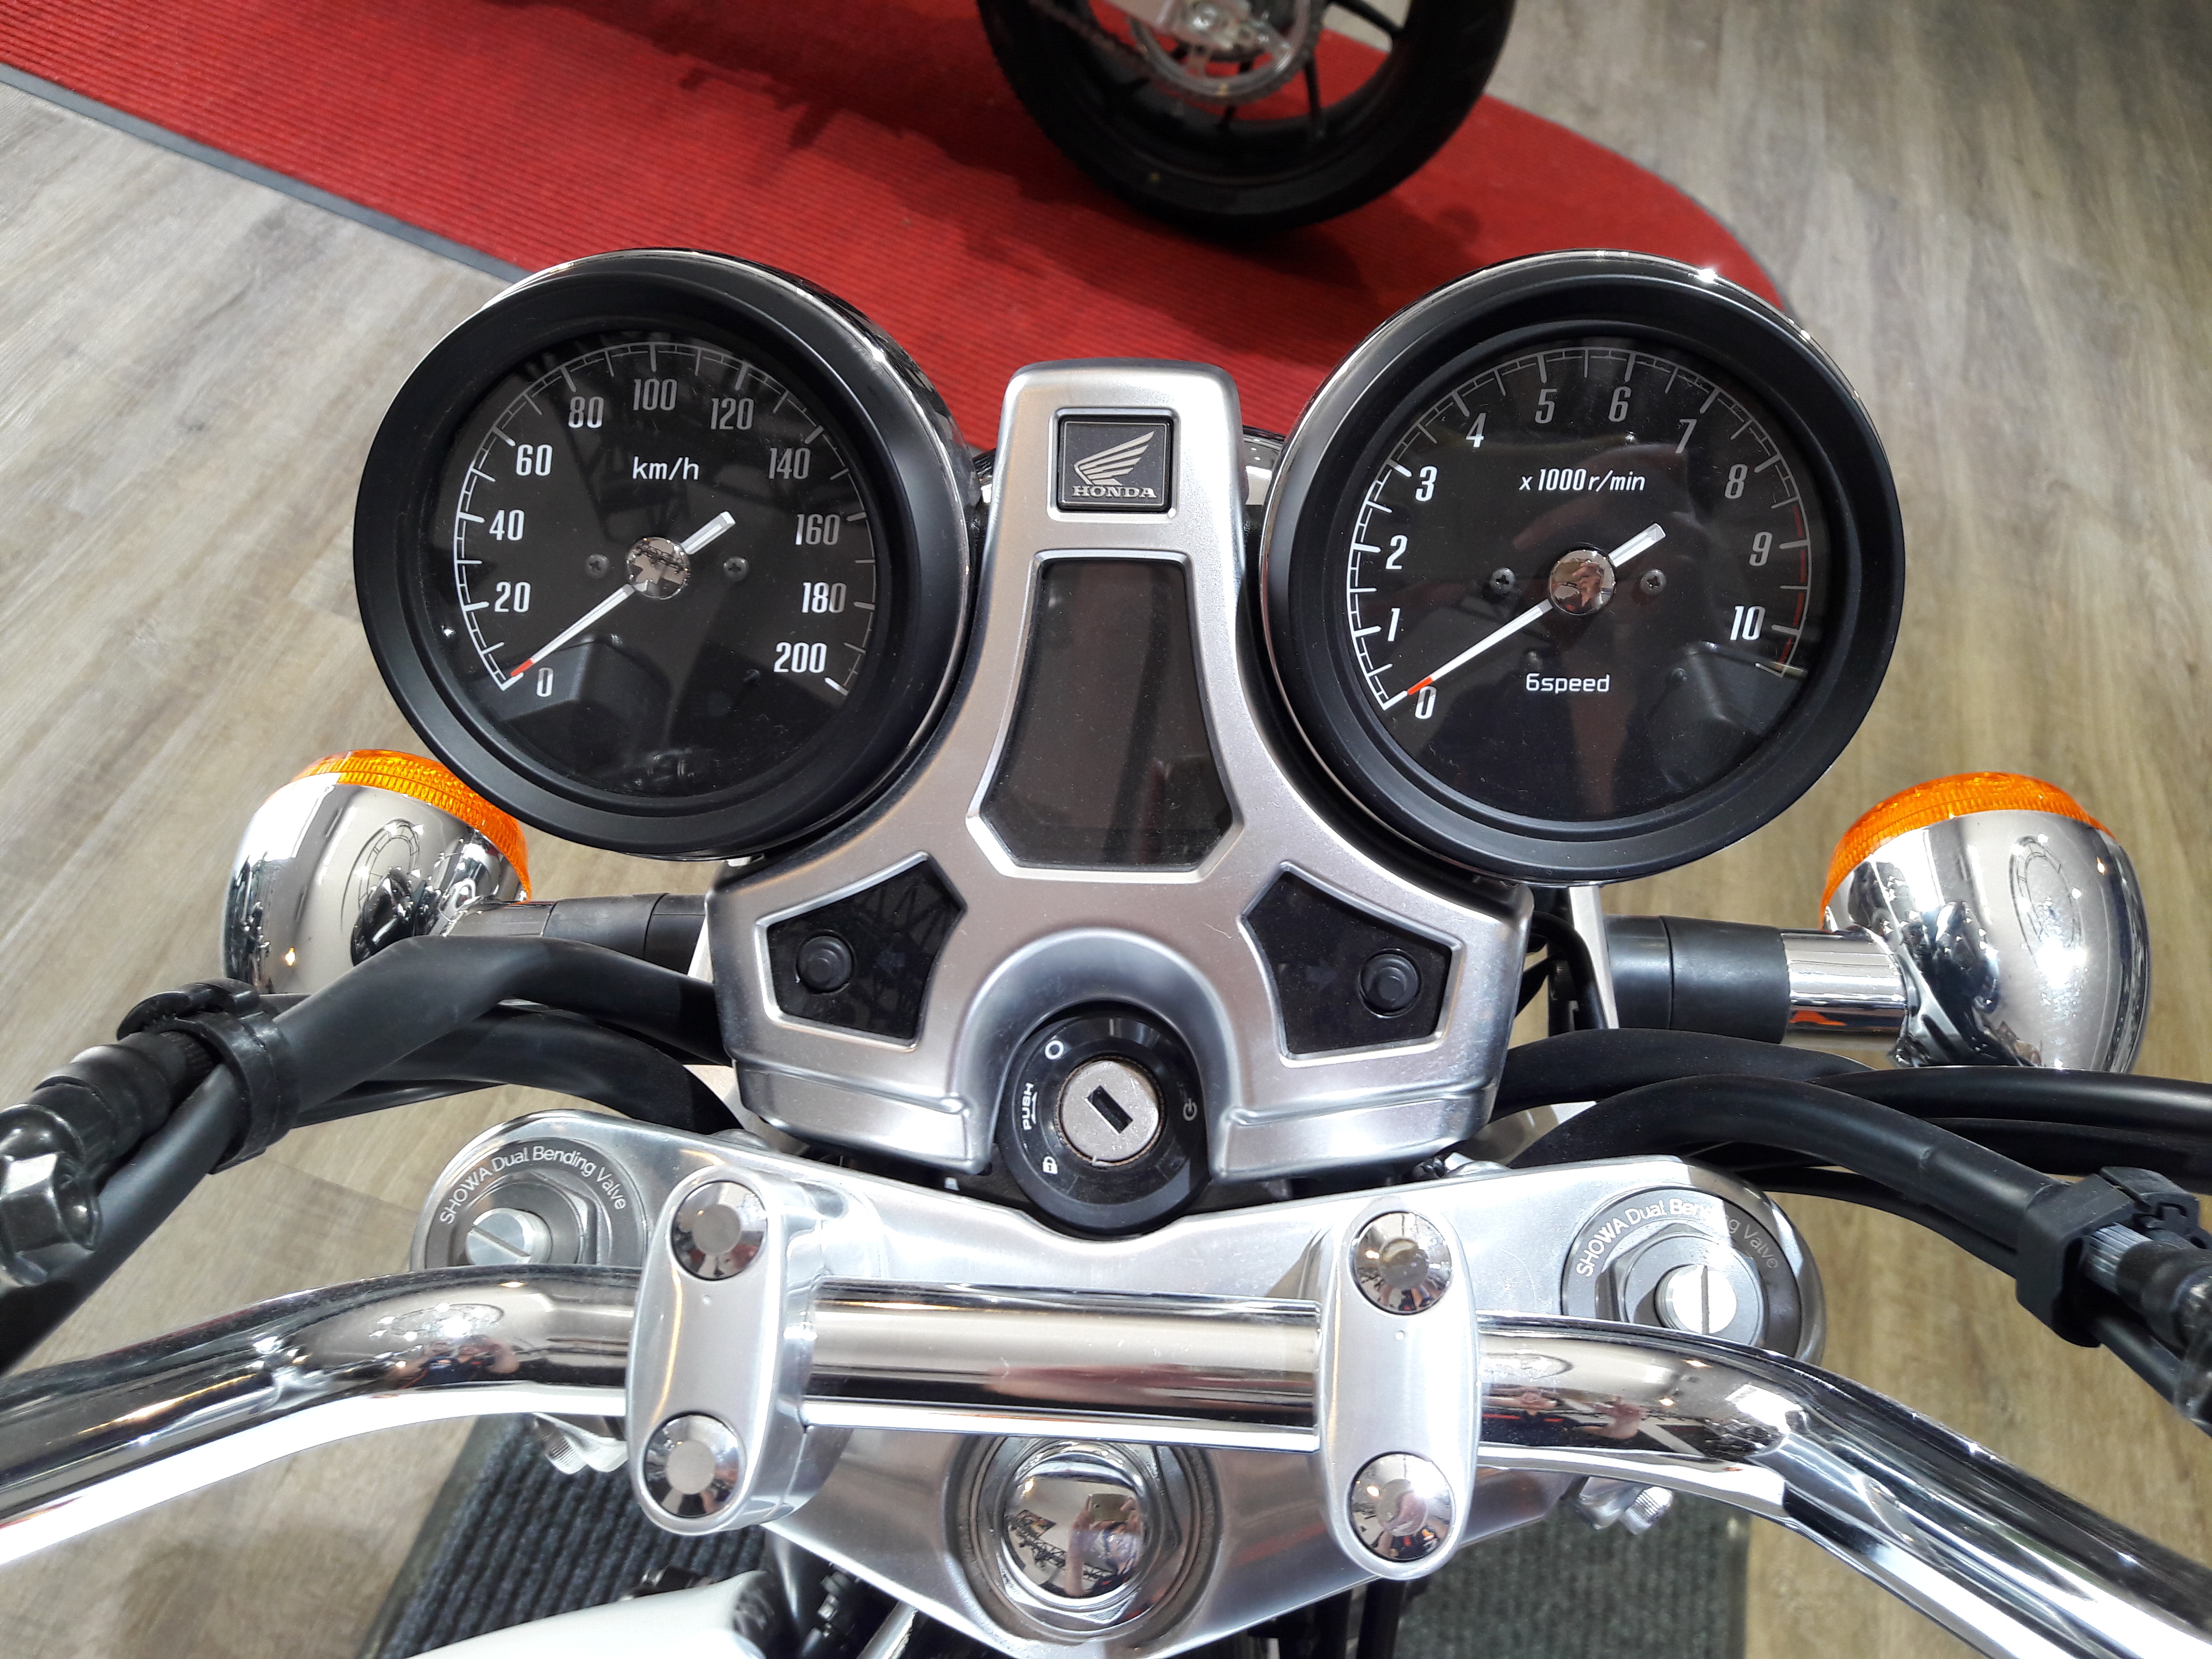 Honda CB1100 ABS 2018 Gia re da ve Viet Nam 0906990538 (4).jpg